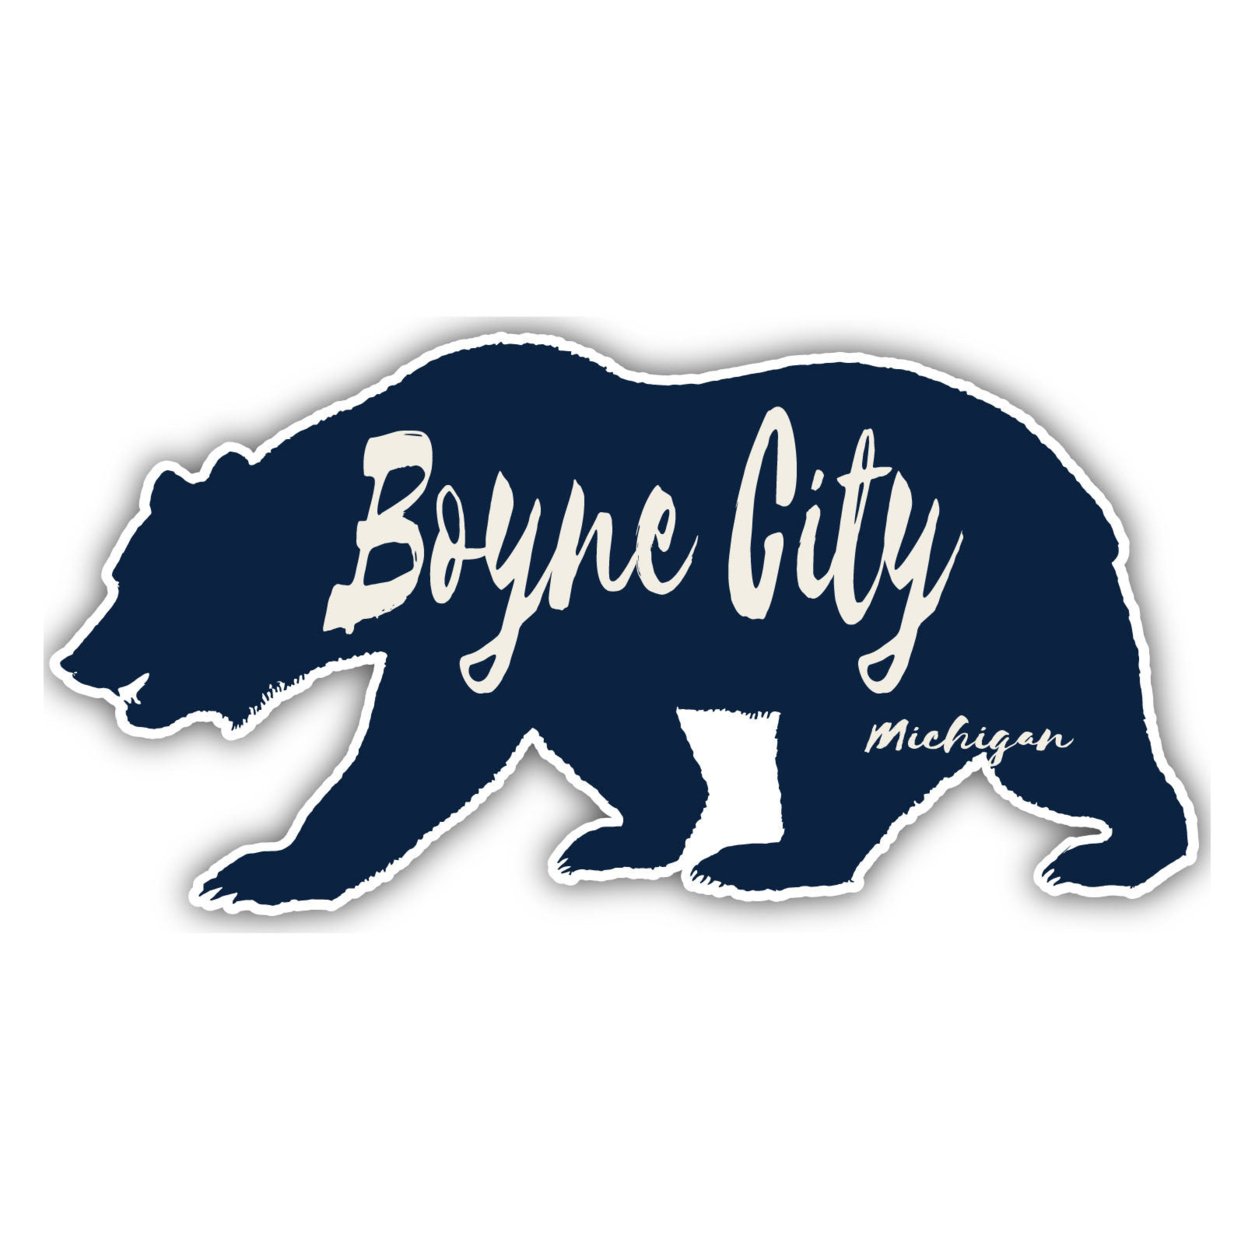 Boyne City Michigan Souvenir Decorative Stickers (Choose Theme And Size) - 4-Pack, 6-Inch, Bear